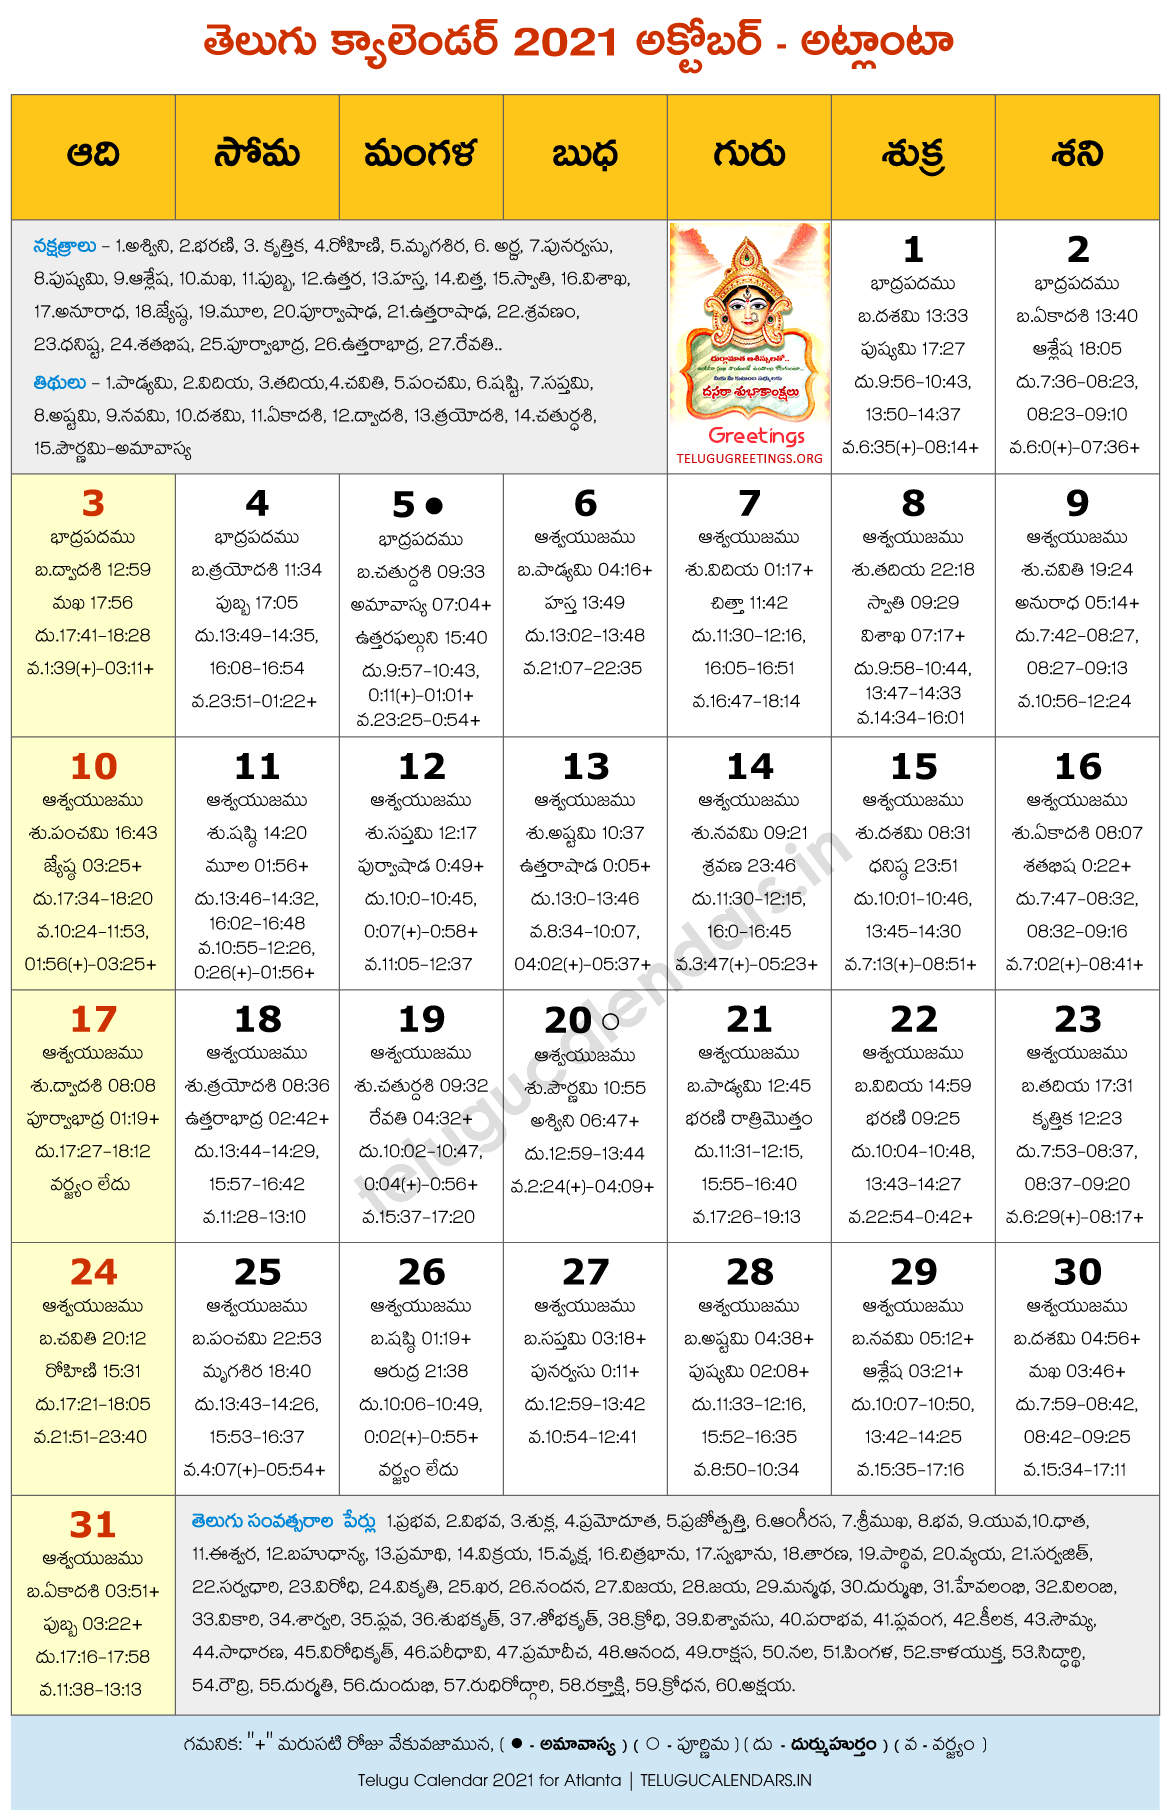 Atlanta 2021 October Telugu Calendar - 2022 Telugu Calendar PDF